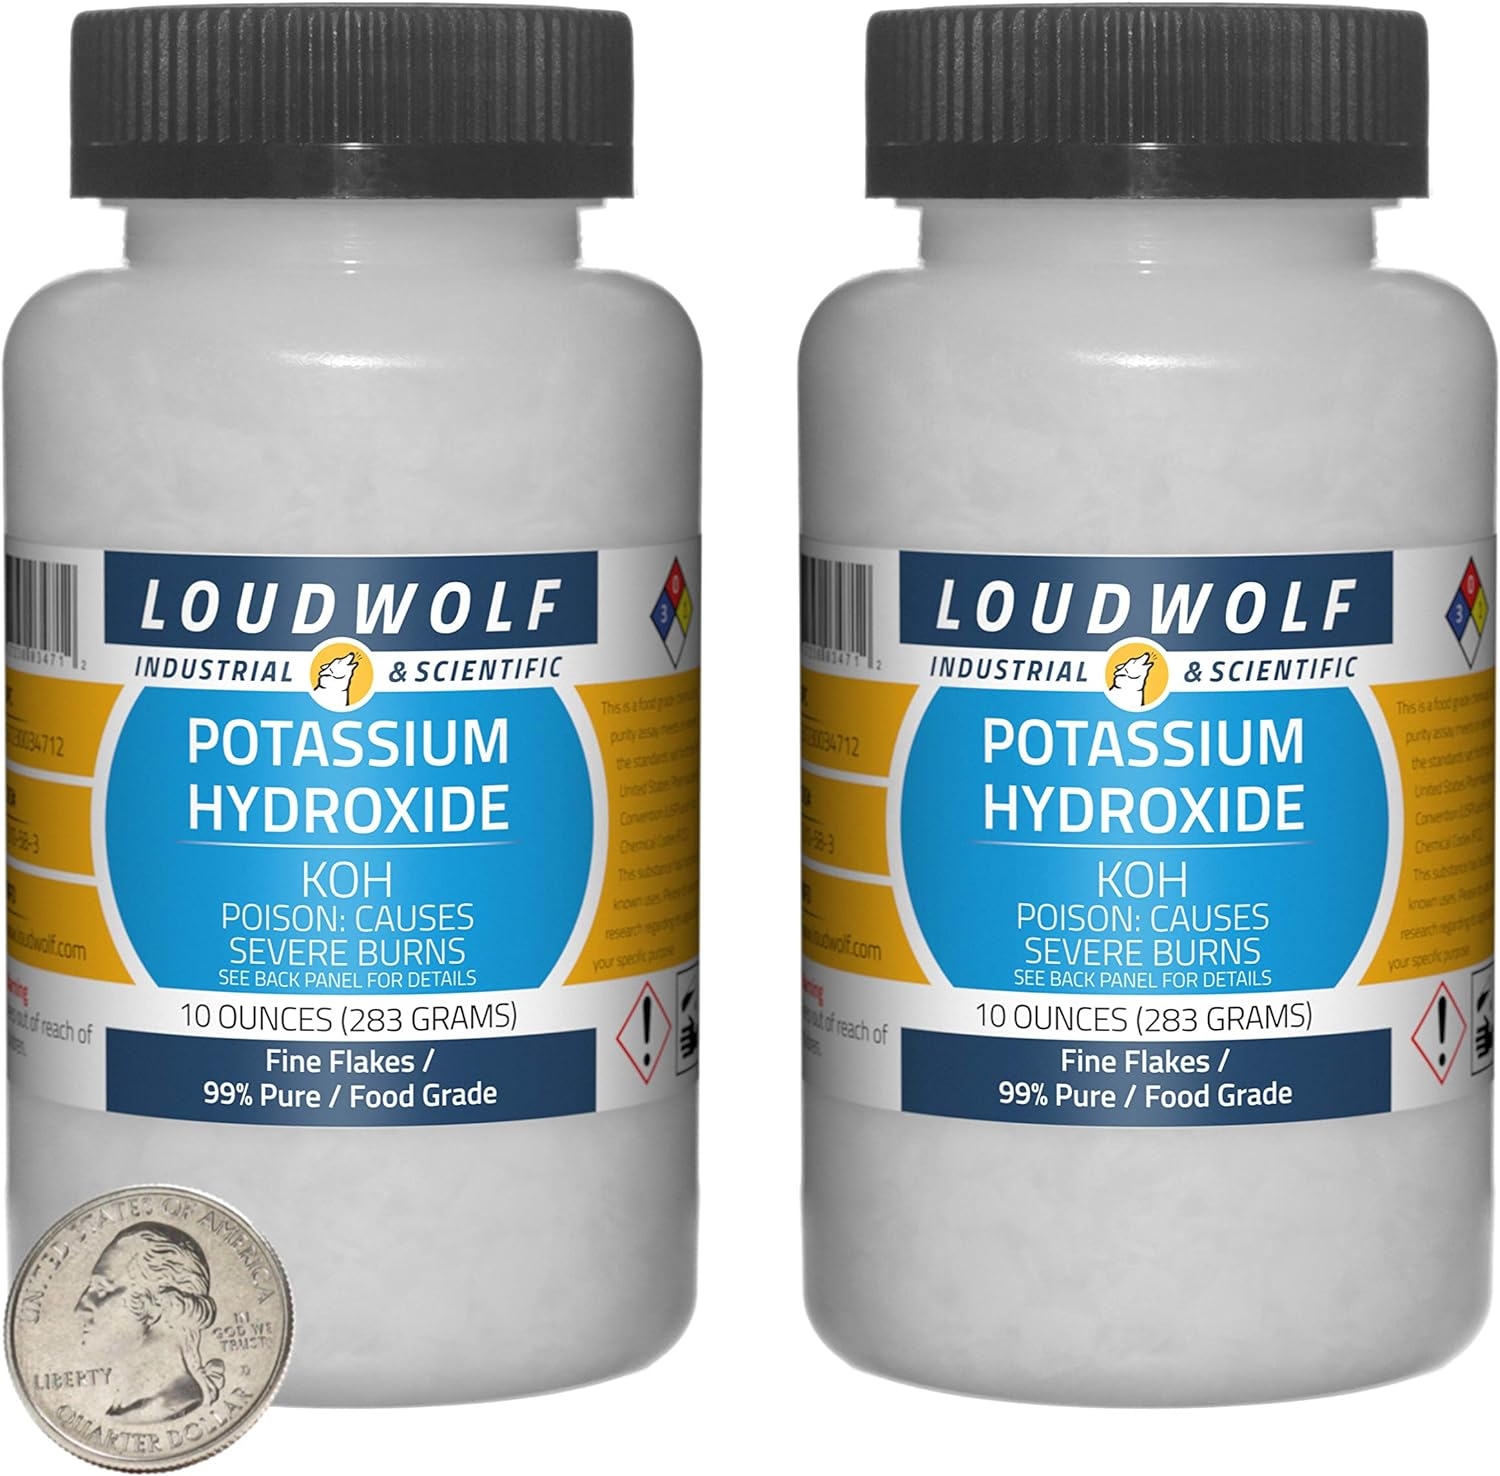 Potassium Hydroxide / 1.3 Pounds / 2 Bottles / 99% Pure Food Grade/Fine Flakes/USA